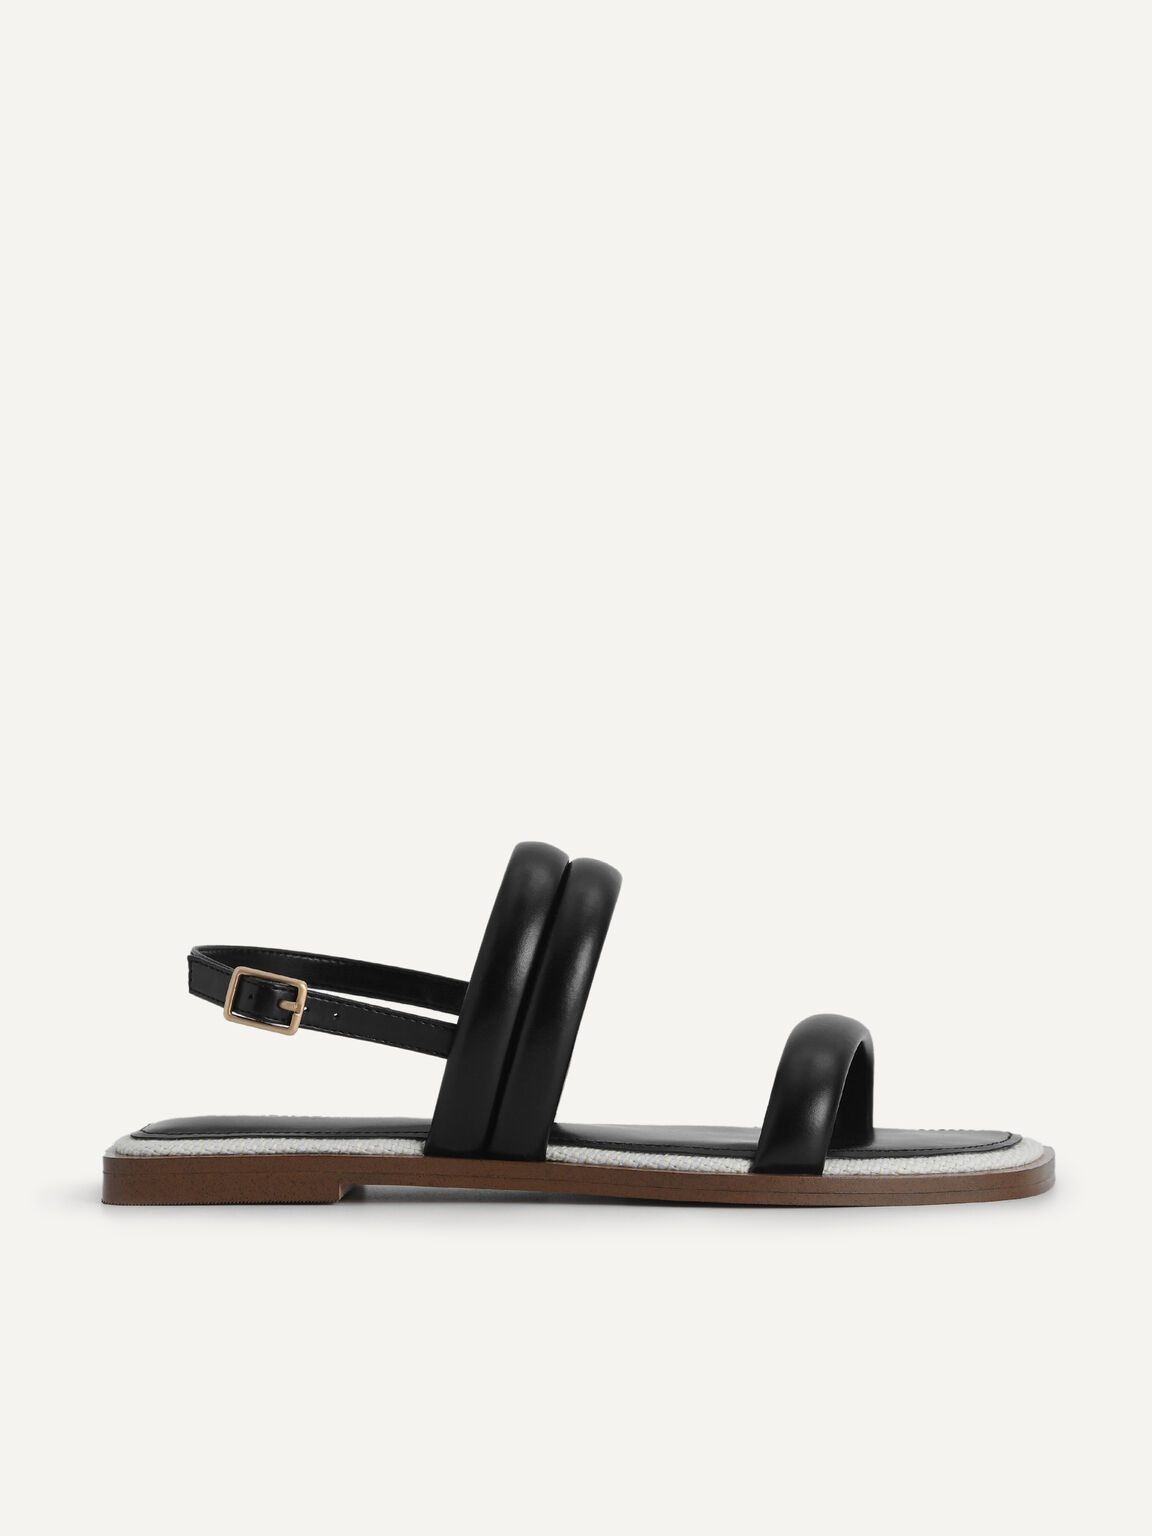 Double Strap Slingback Sandals, Black, hi-res